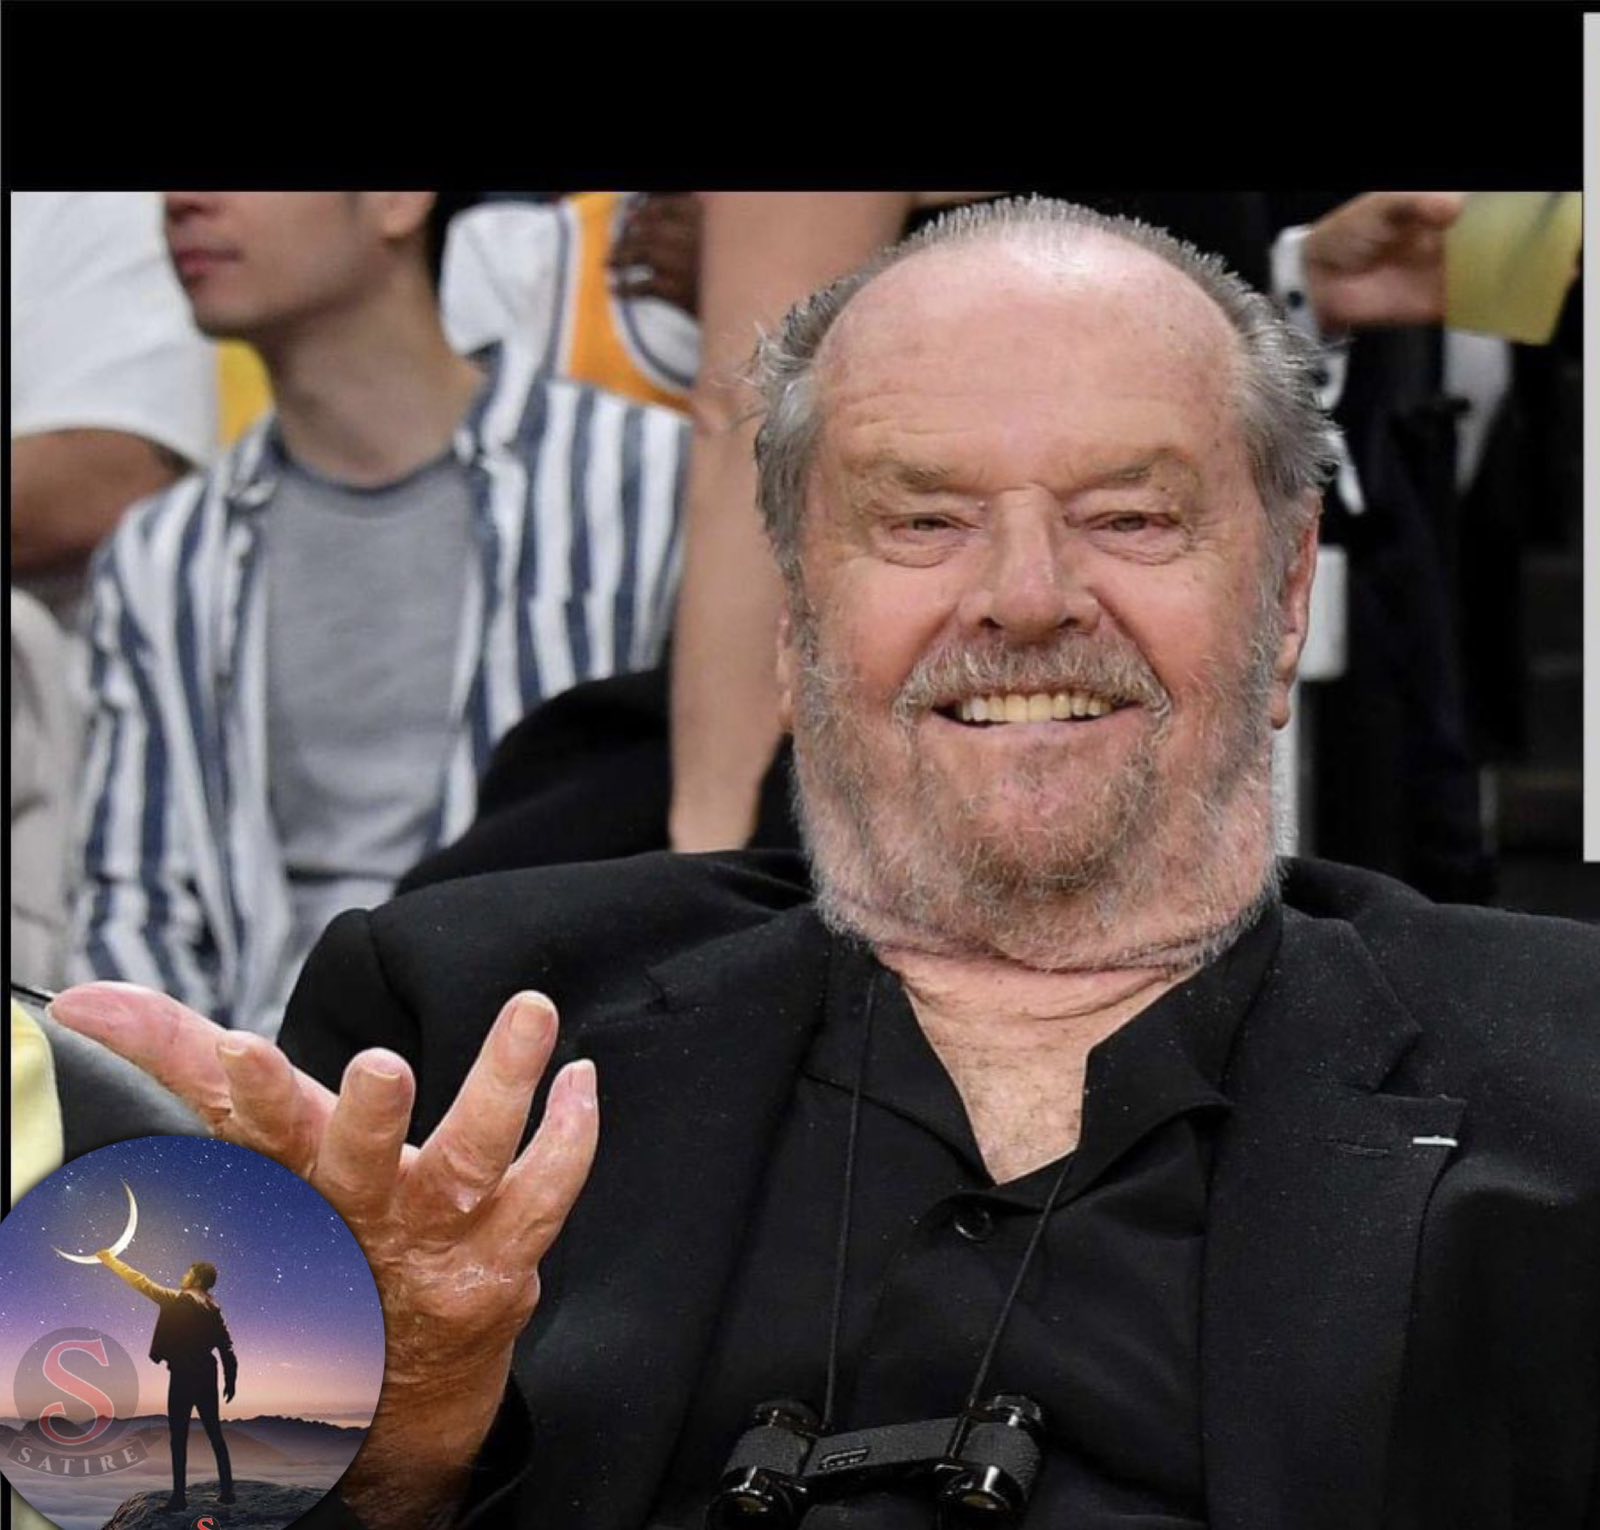 Jack Nicholson Expresses Disappointment in Robert De Niro: “Such a Woke Wimp”